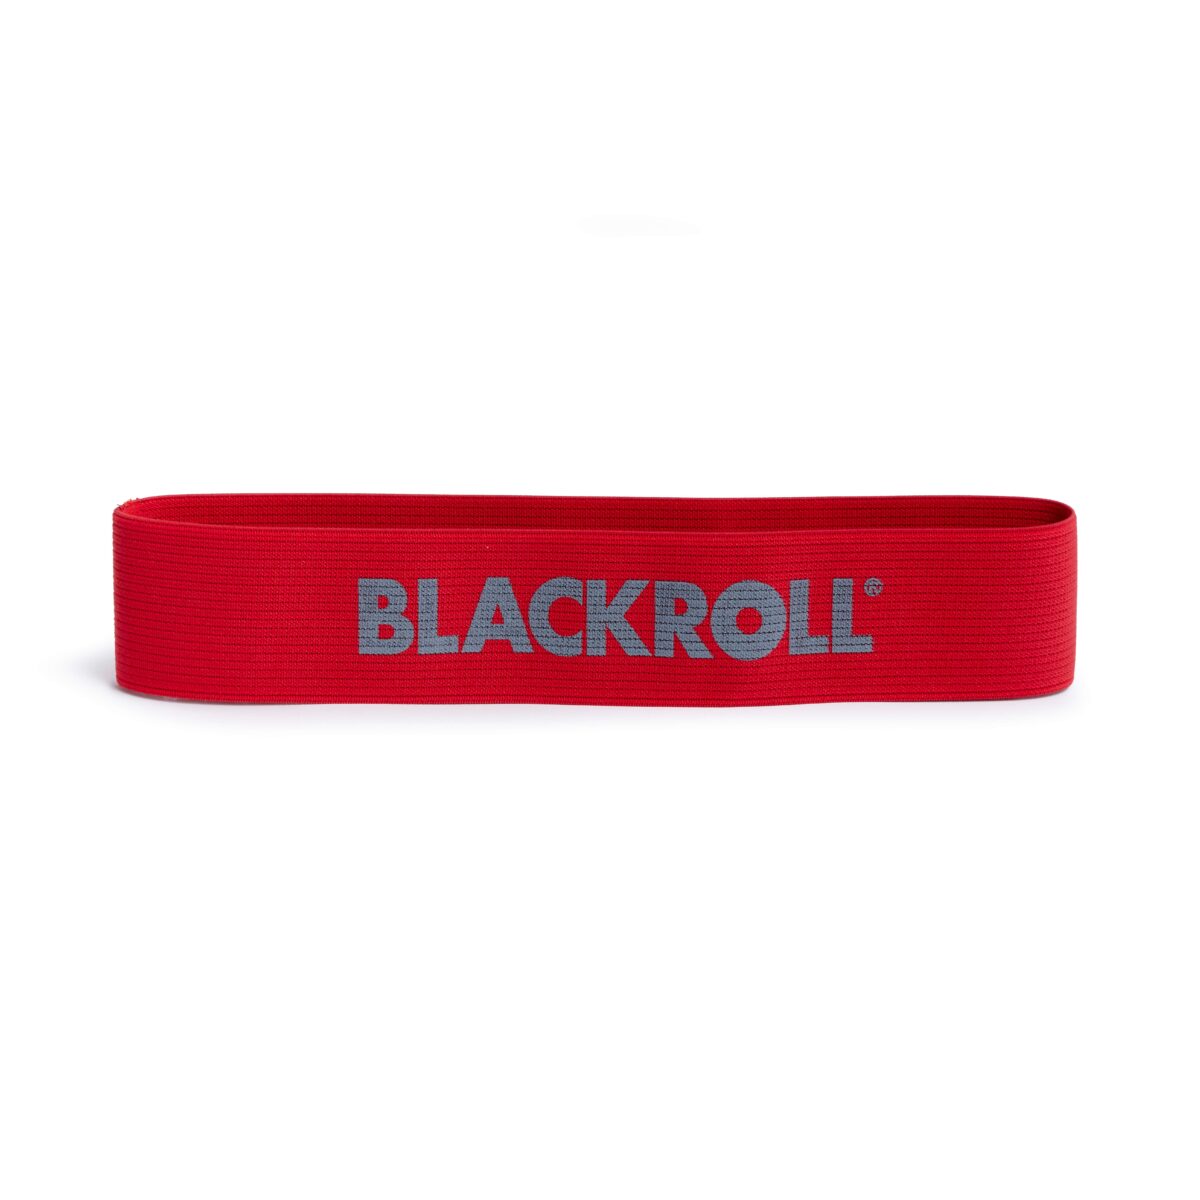 Blackroll Loop-Band